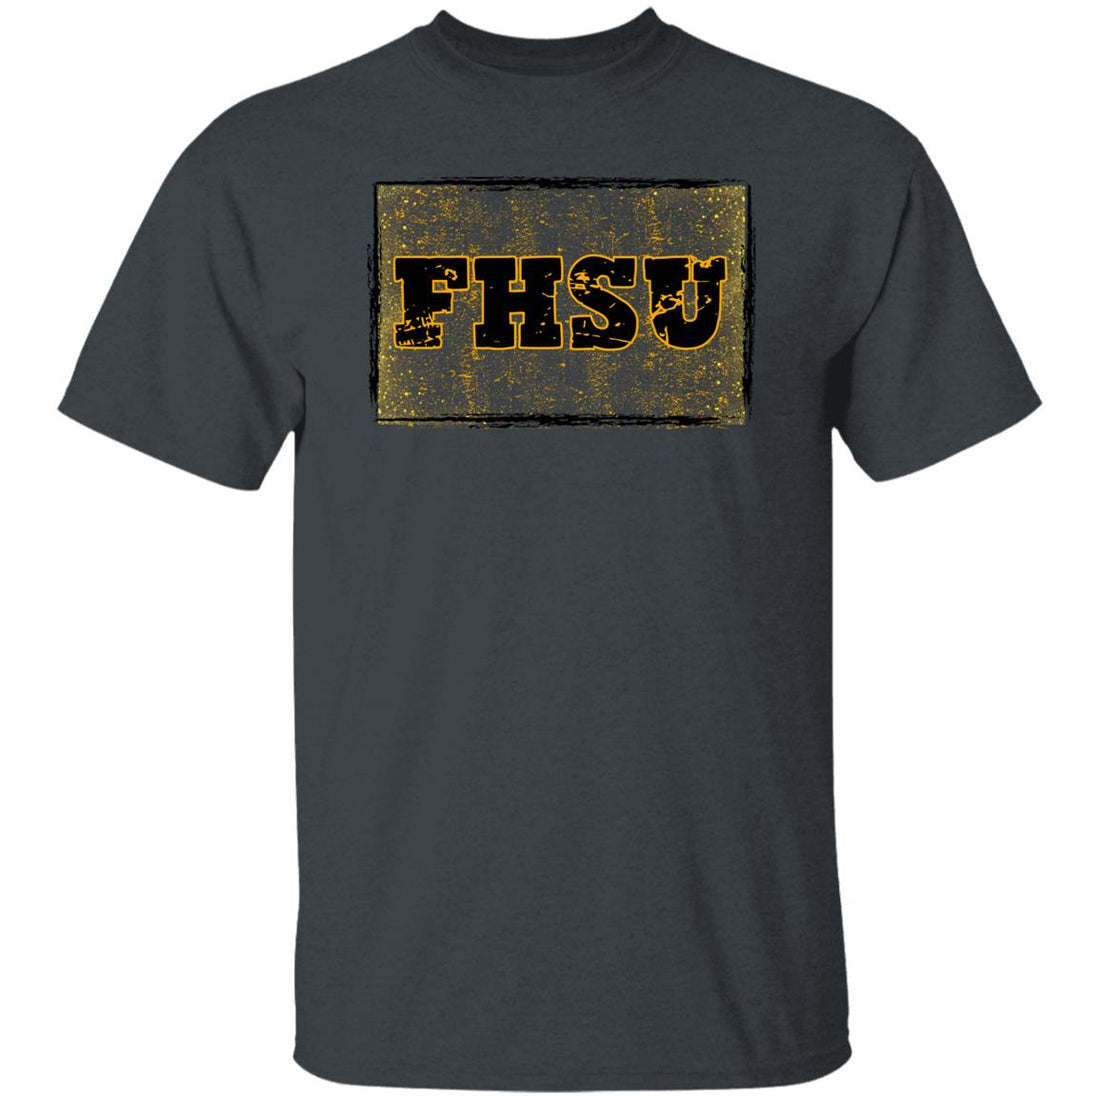 FHSU Vintage T-Shirt - T-Shirts - Positively Sassy - FHSU Vintage T-Shirt